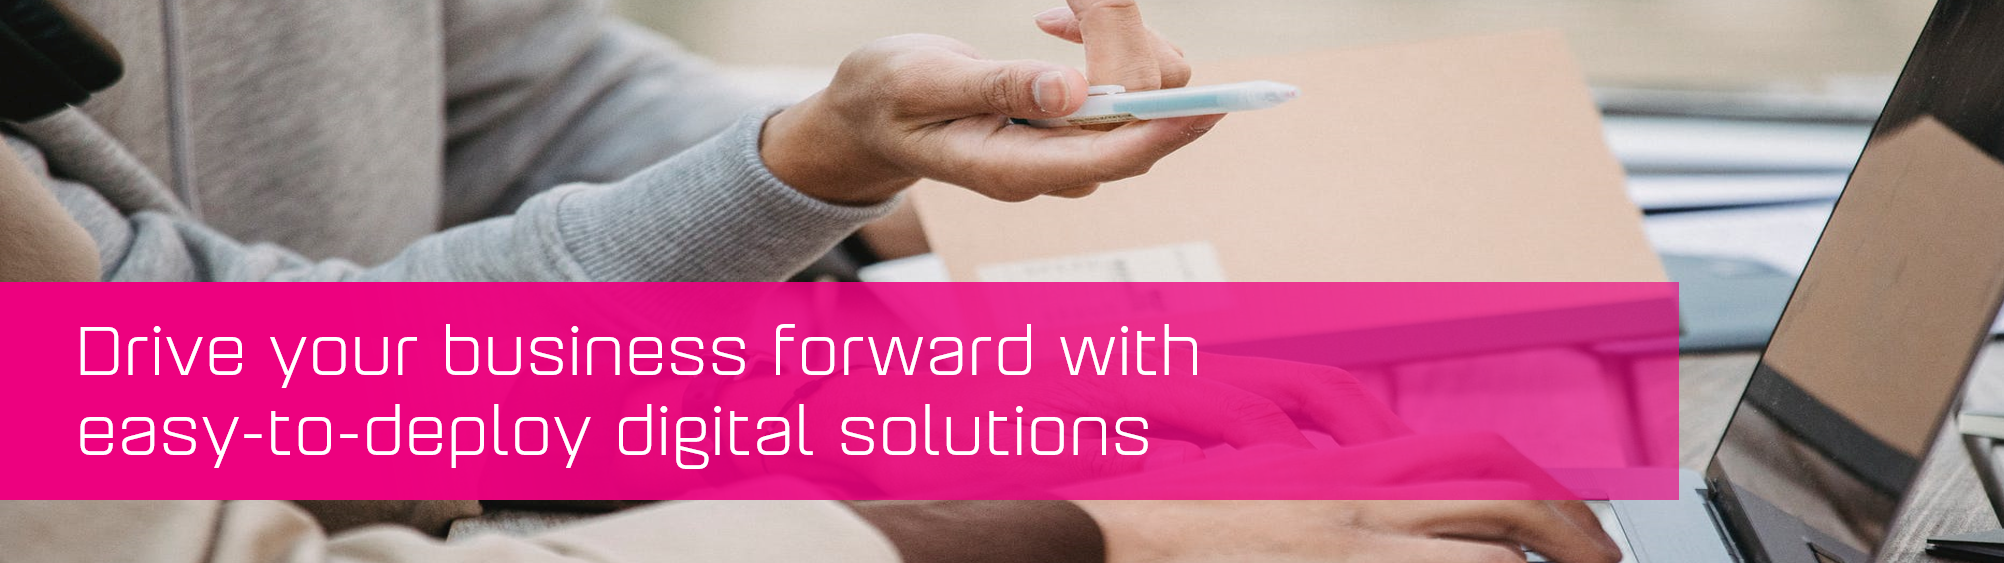 KCS SA - Blog - Drive your business with digital solutions banner